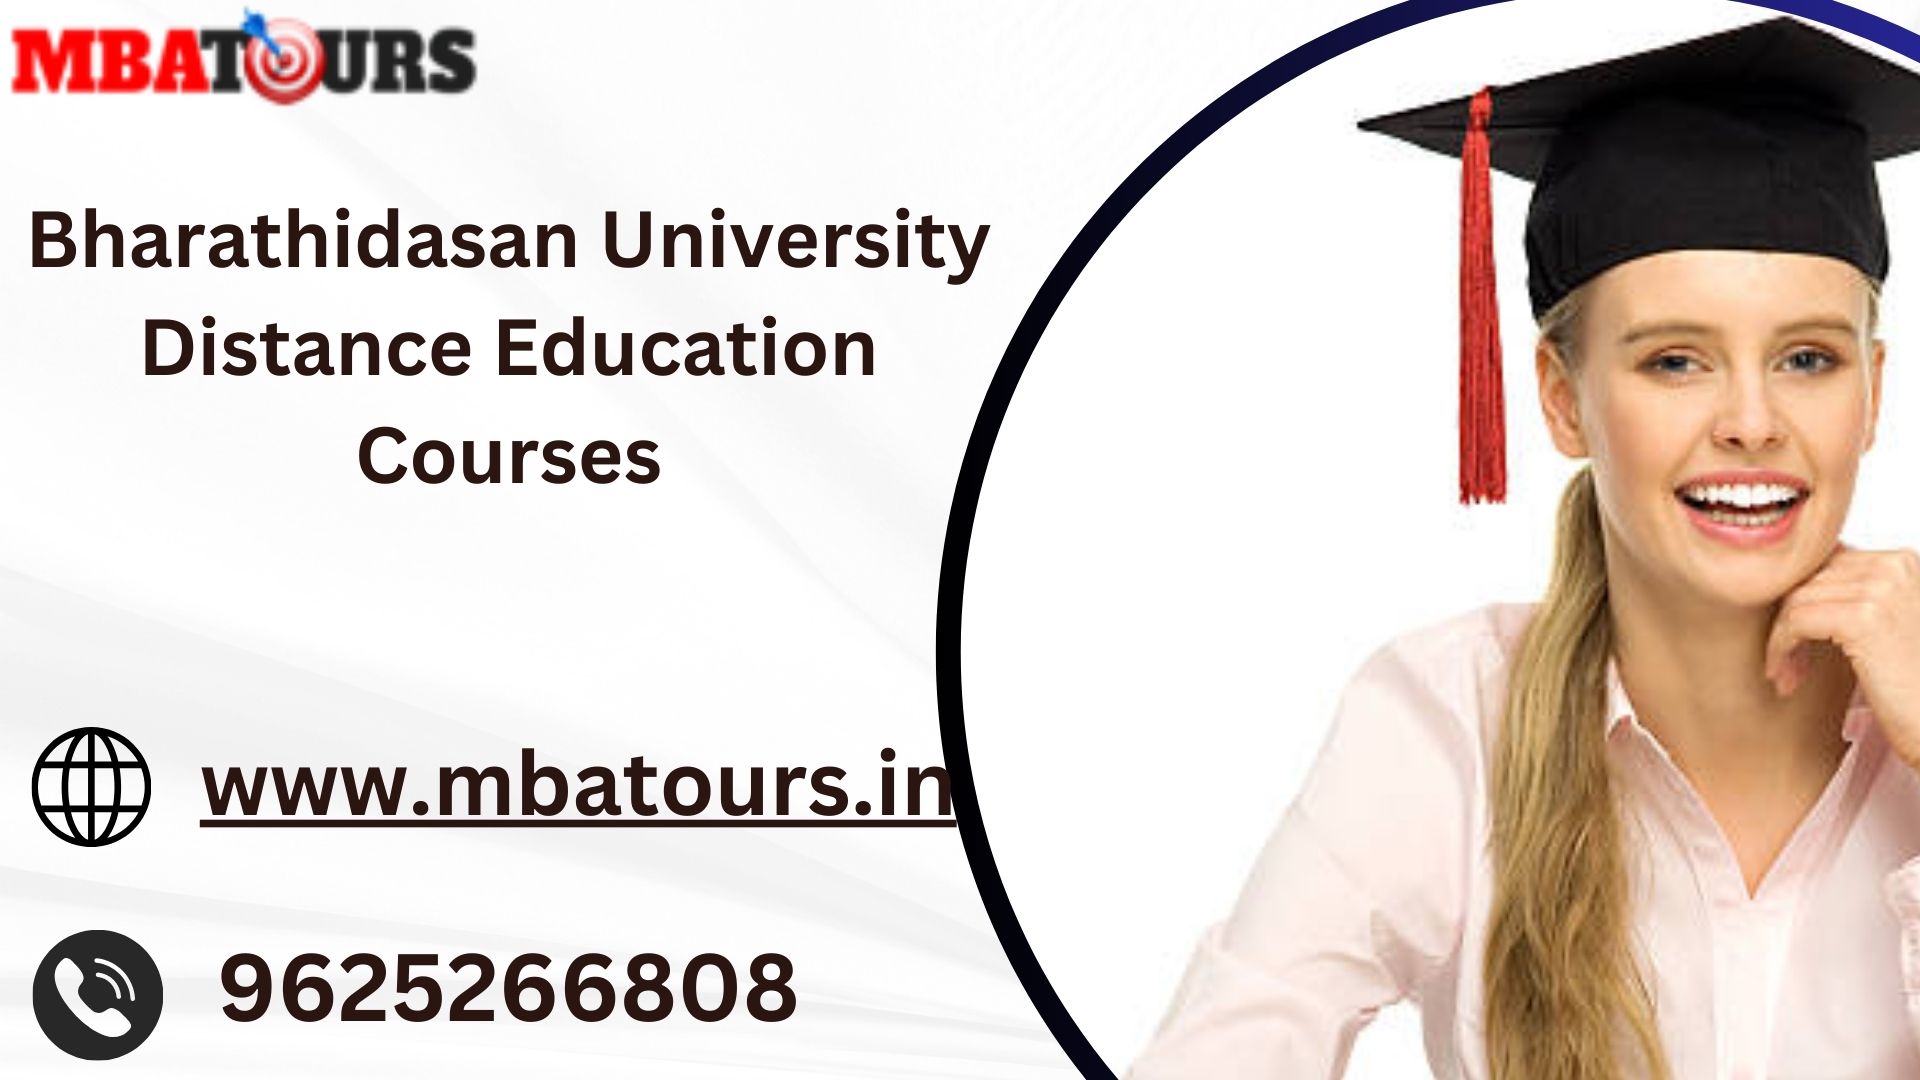 Bharathidasan University Distance Education Courses